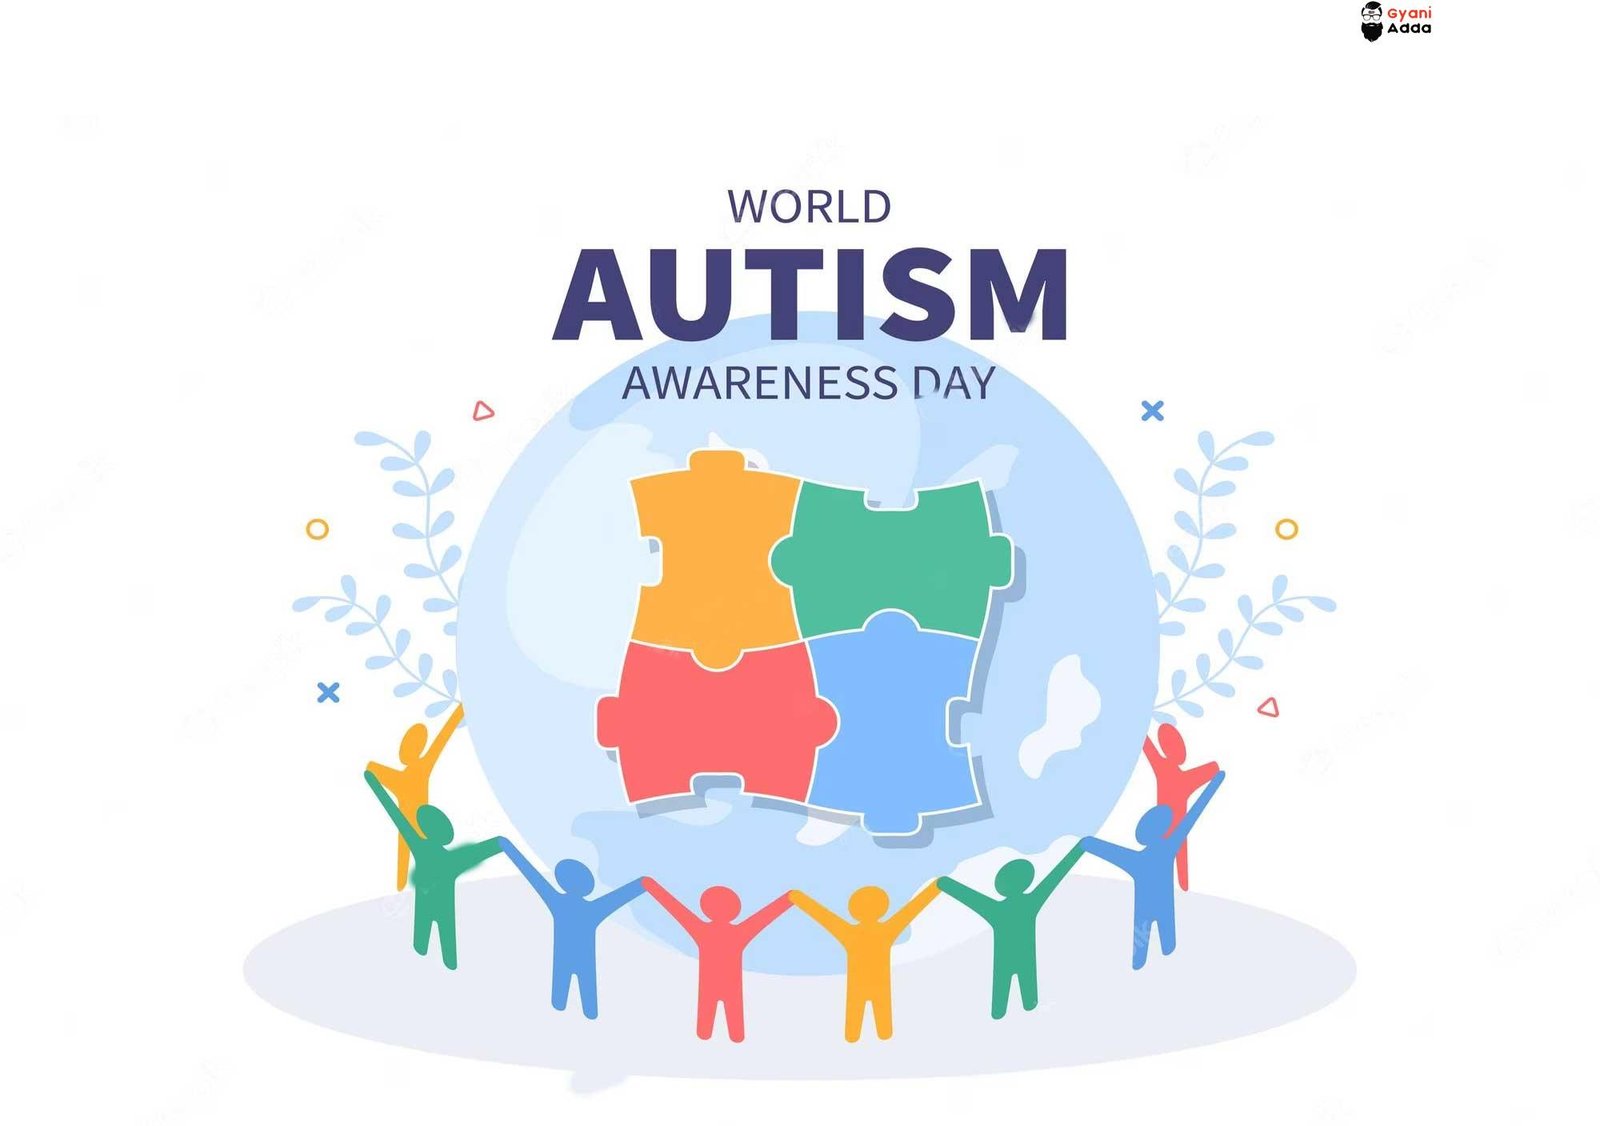 Happy World Autism Awareness Day